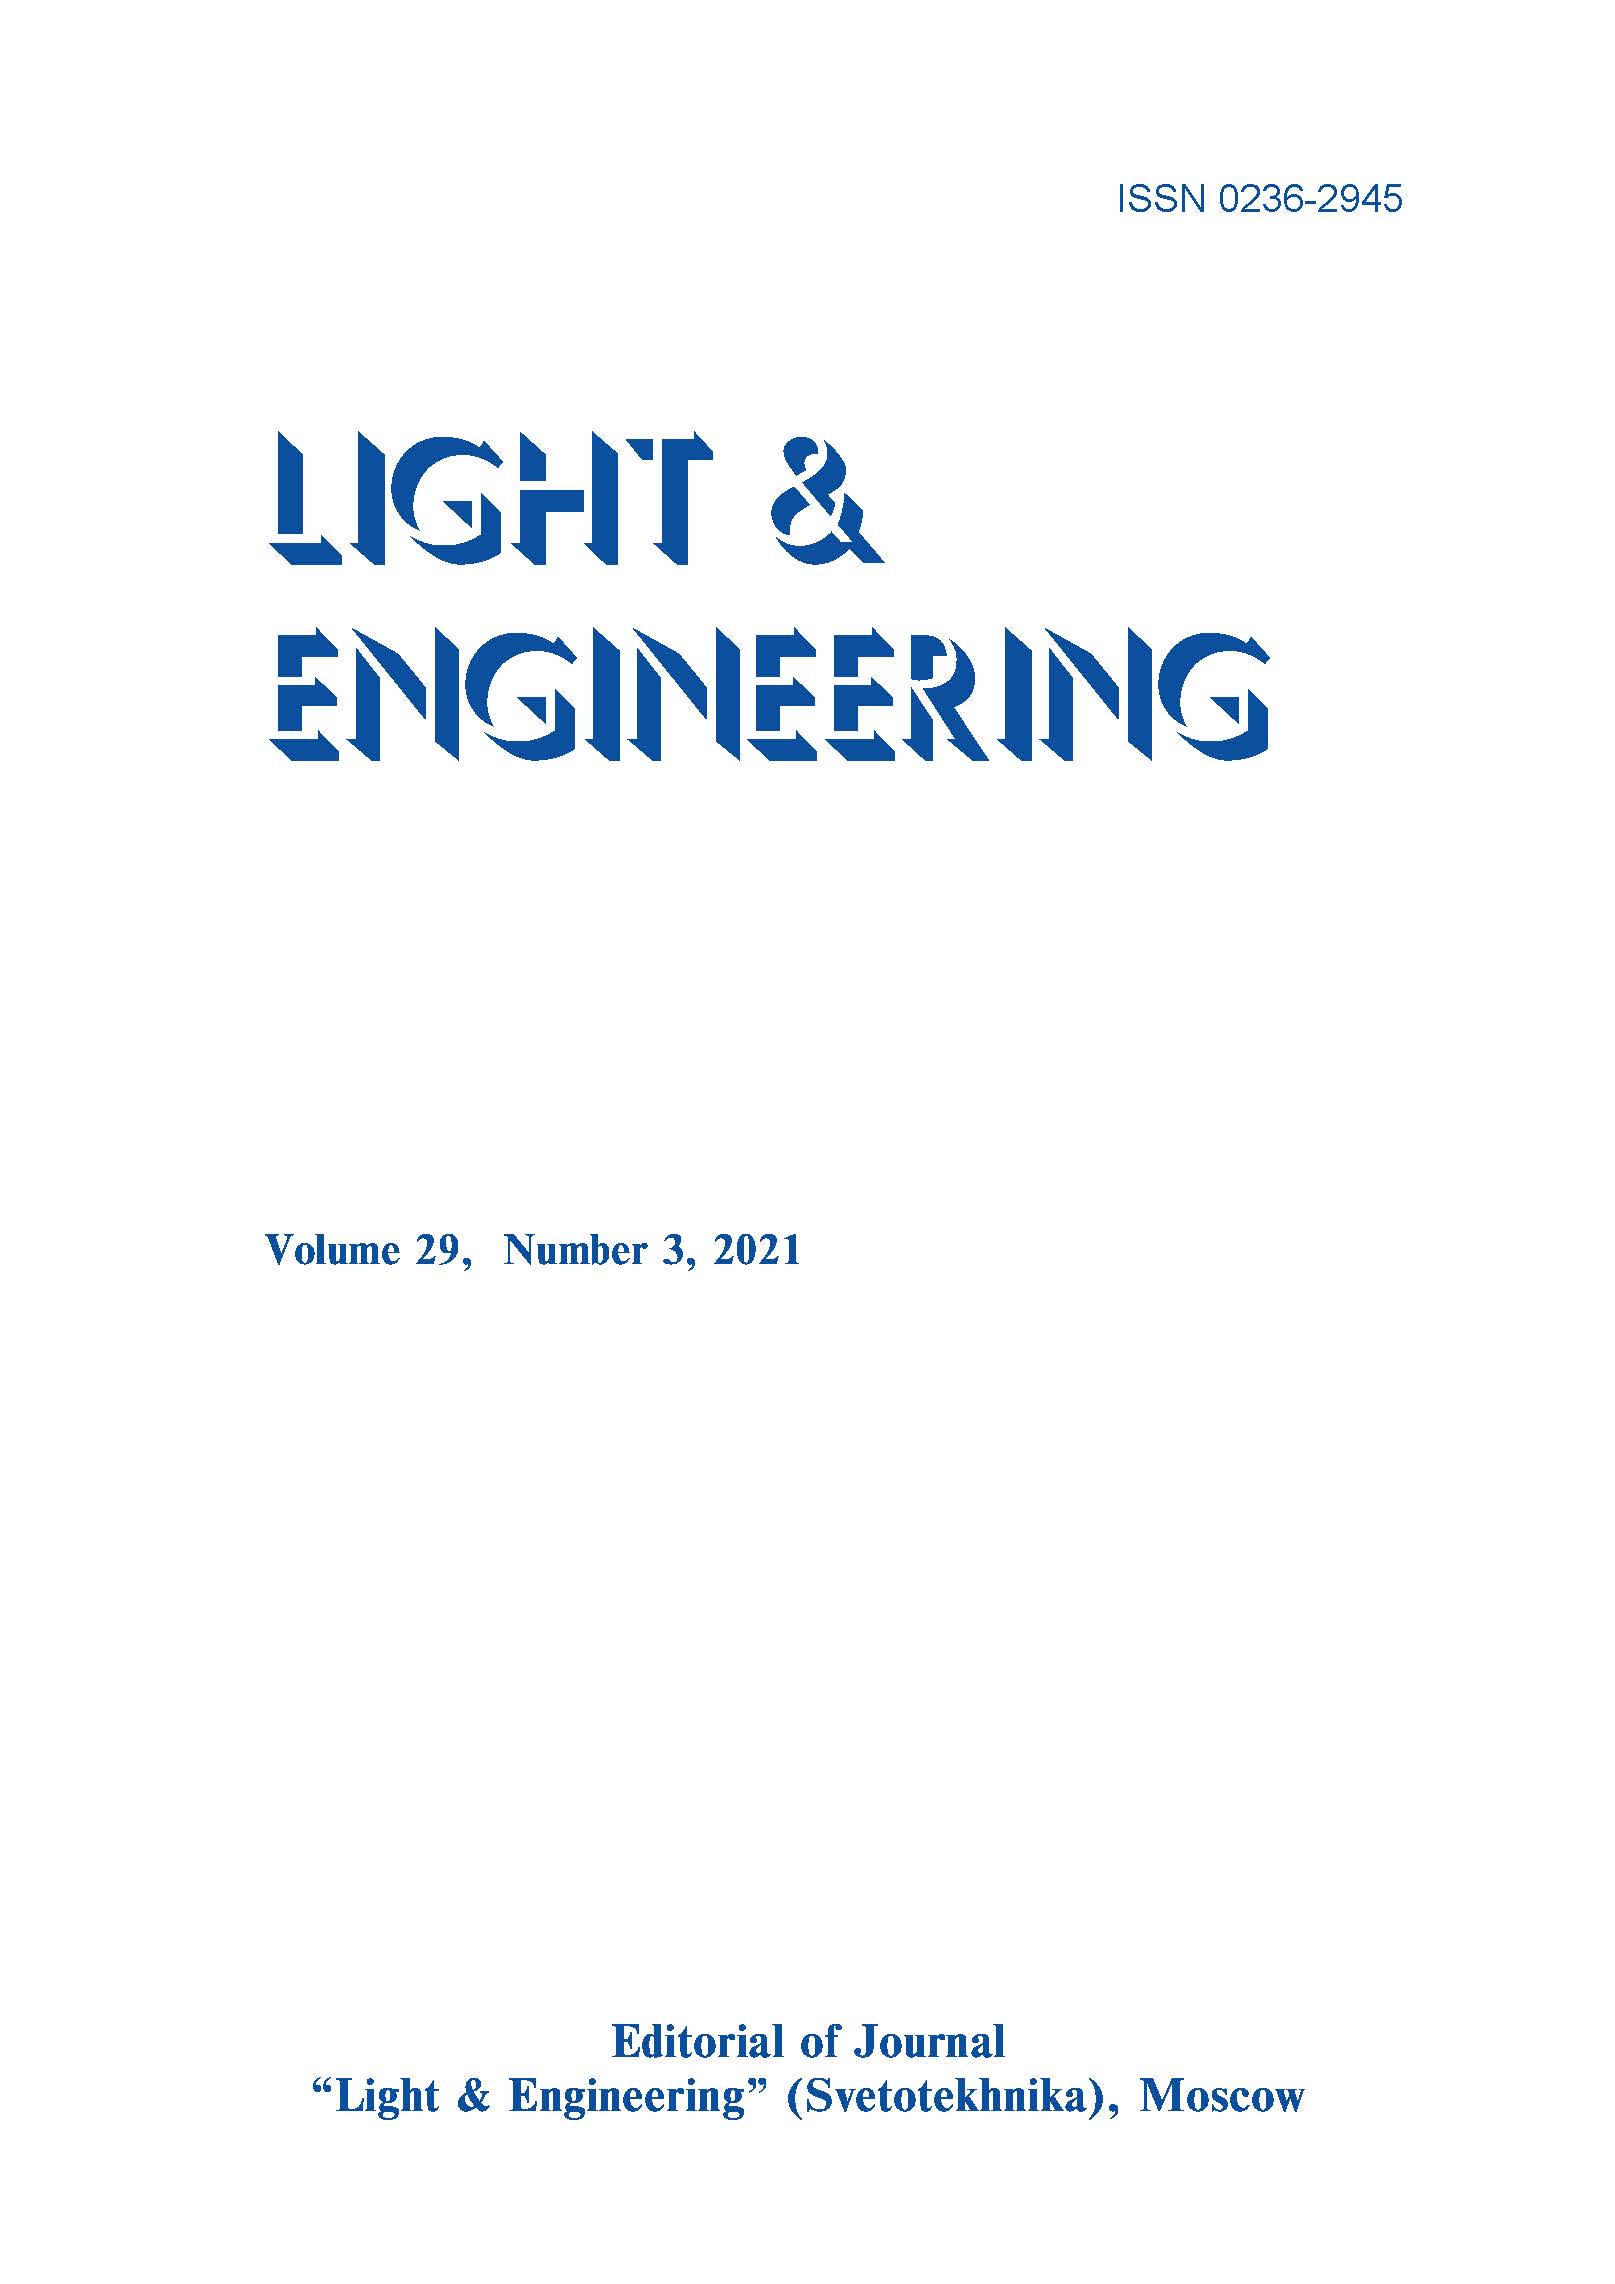 Development And Testing Of Combined germicidal Recirculator L&E, Vol. 29, No. 3, 2021